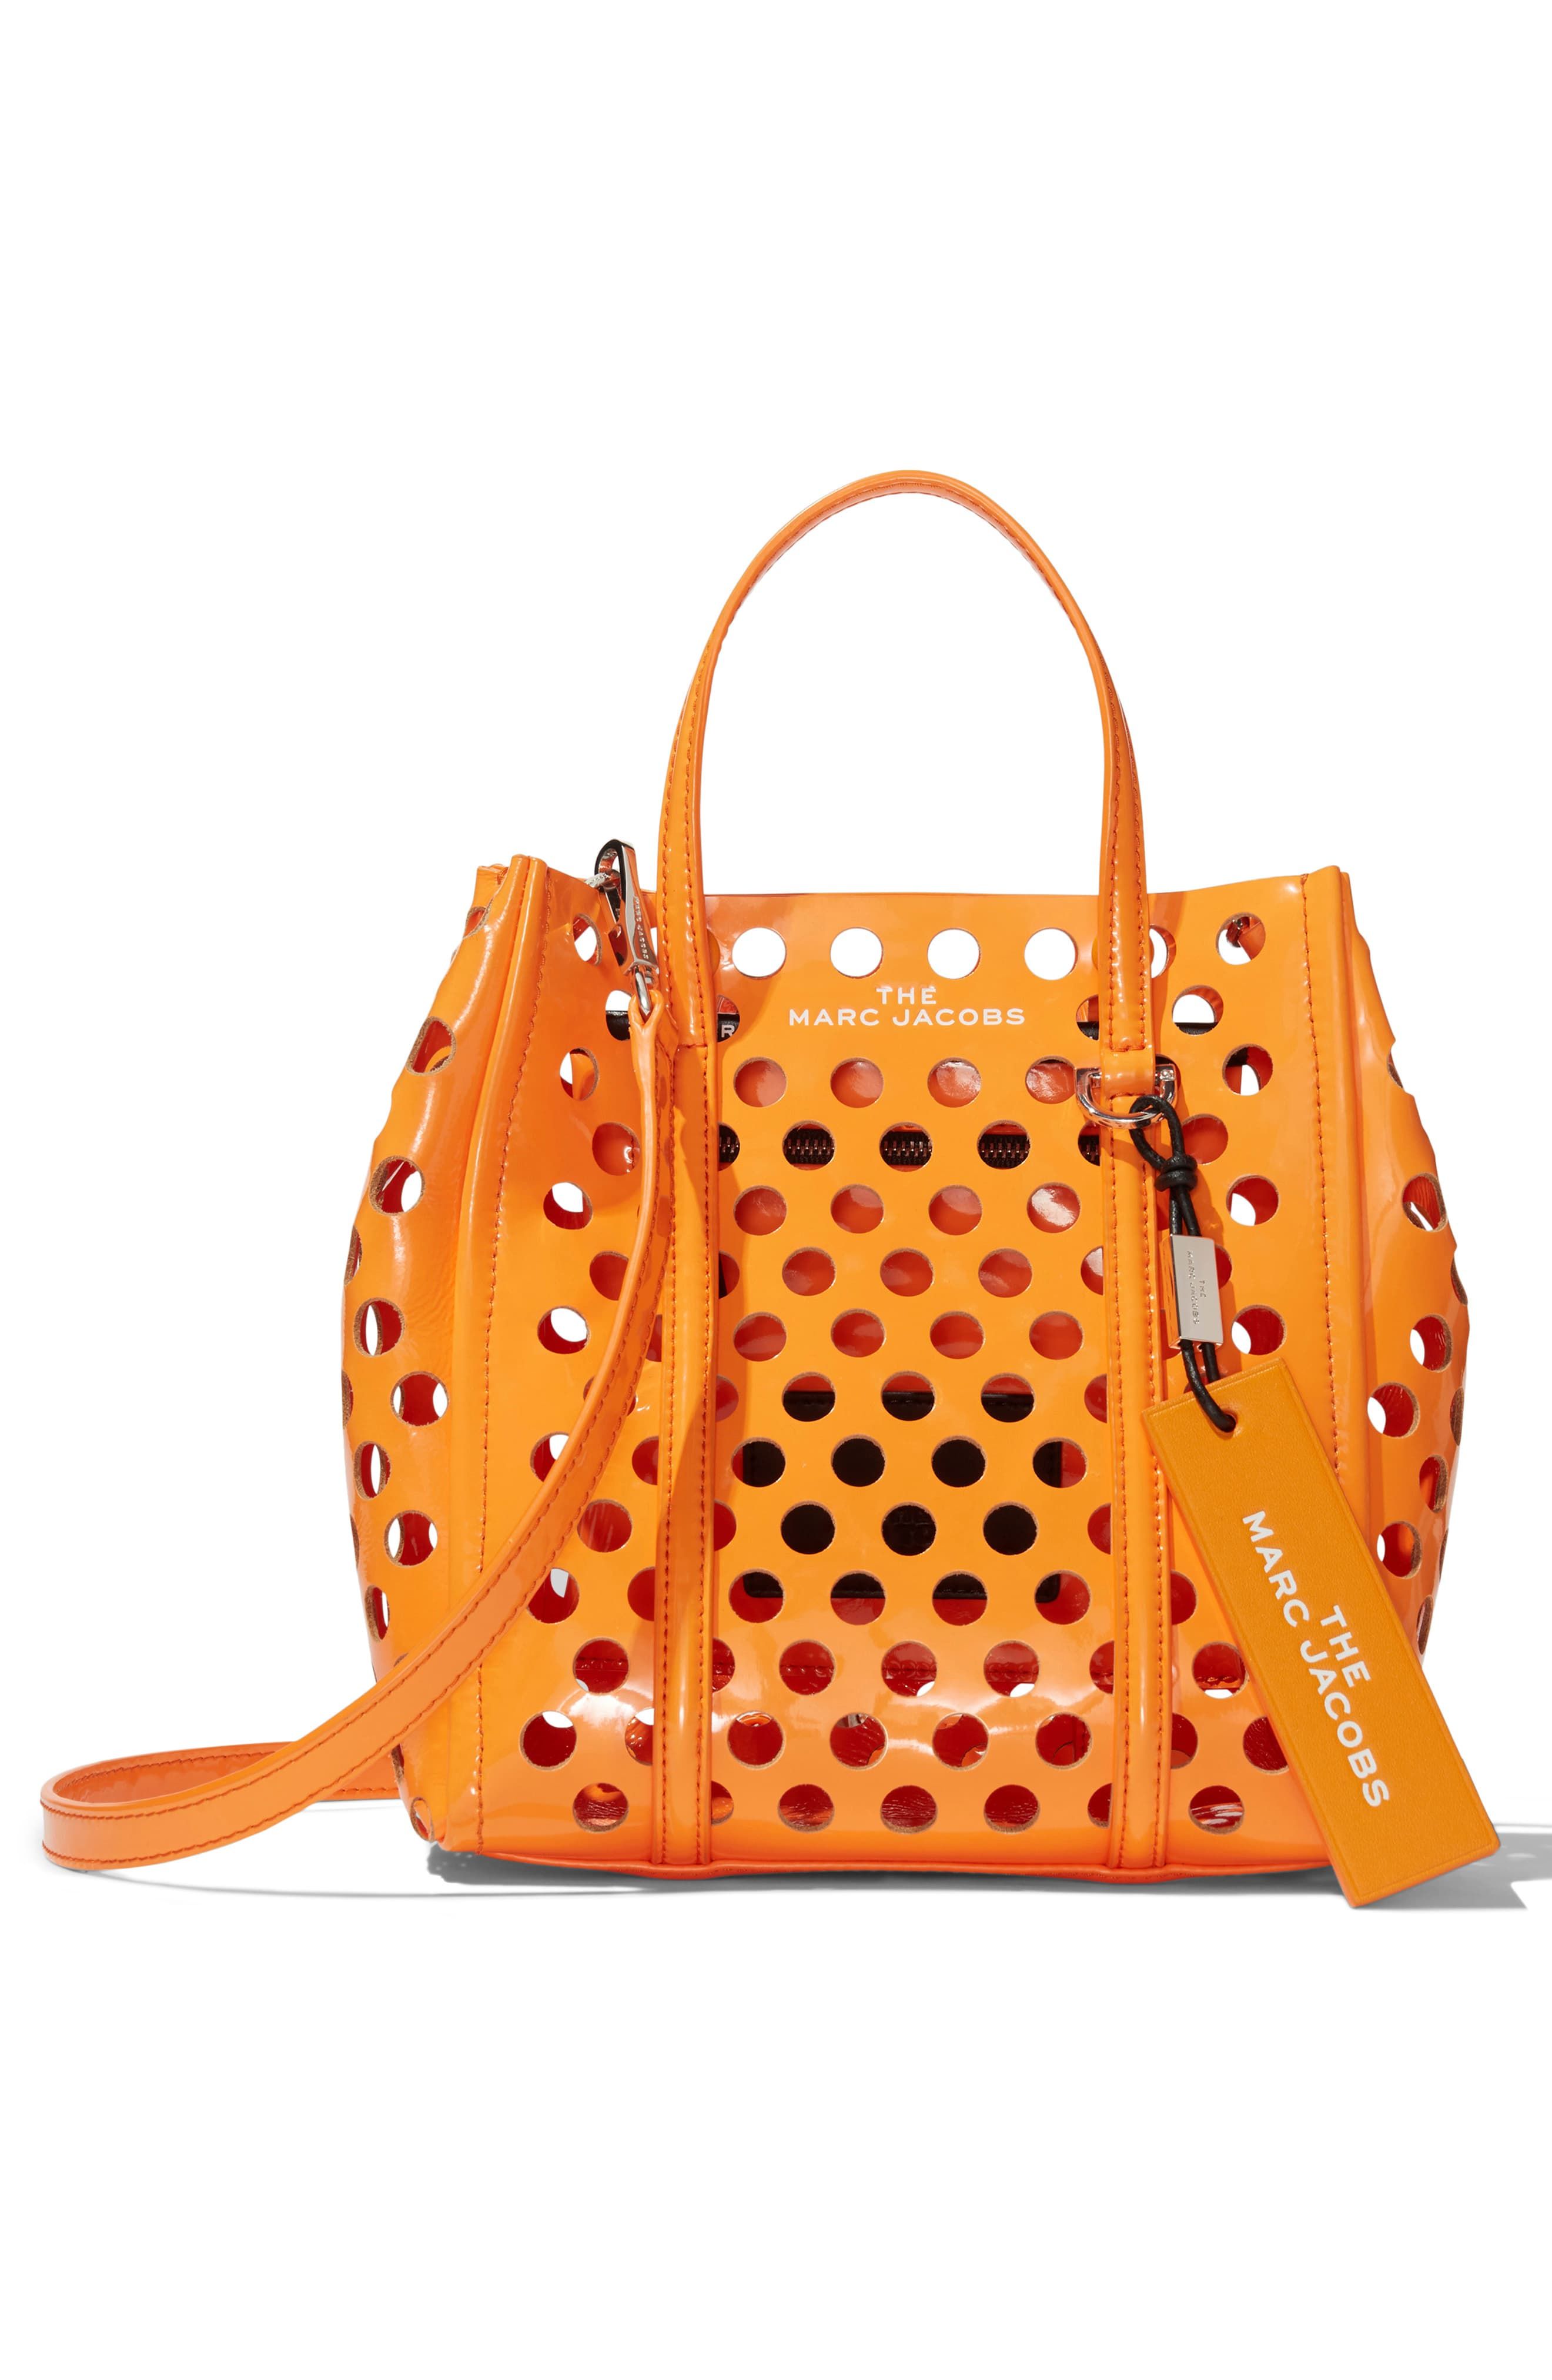 Handbags Bag Sour Sweet Yellow Fruit Pineapple Leather Hand Totes Bag Causal Handbags Zipped Shoulder Organizer For Lady Girls Womens Large Shoulder Bag For Men 